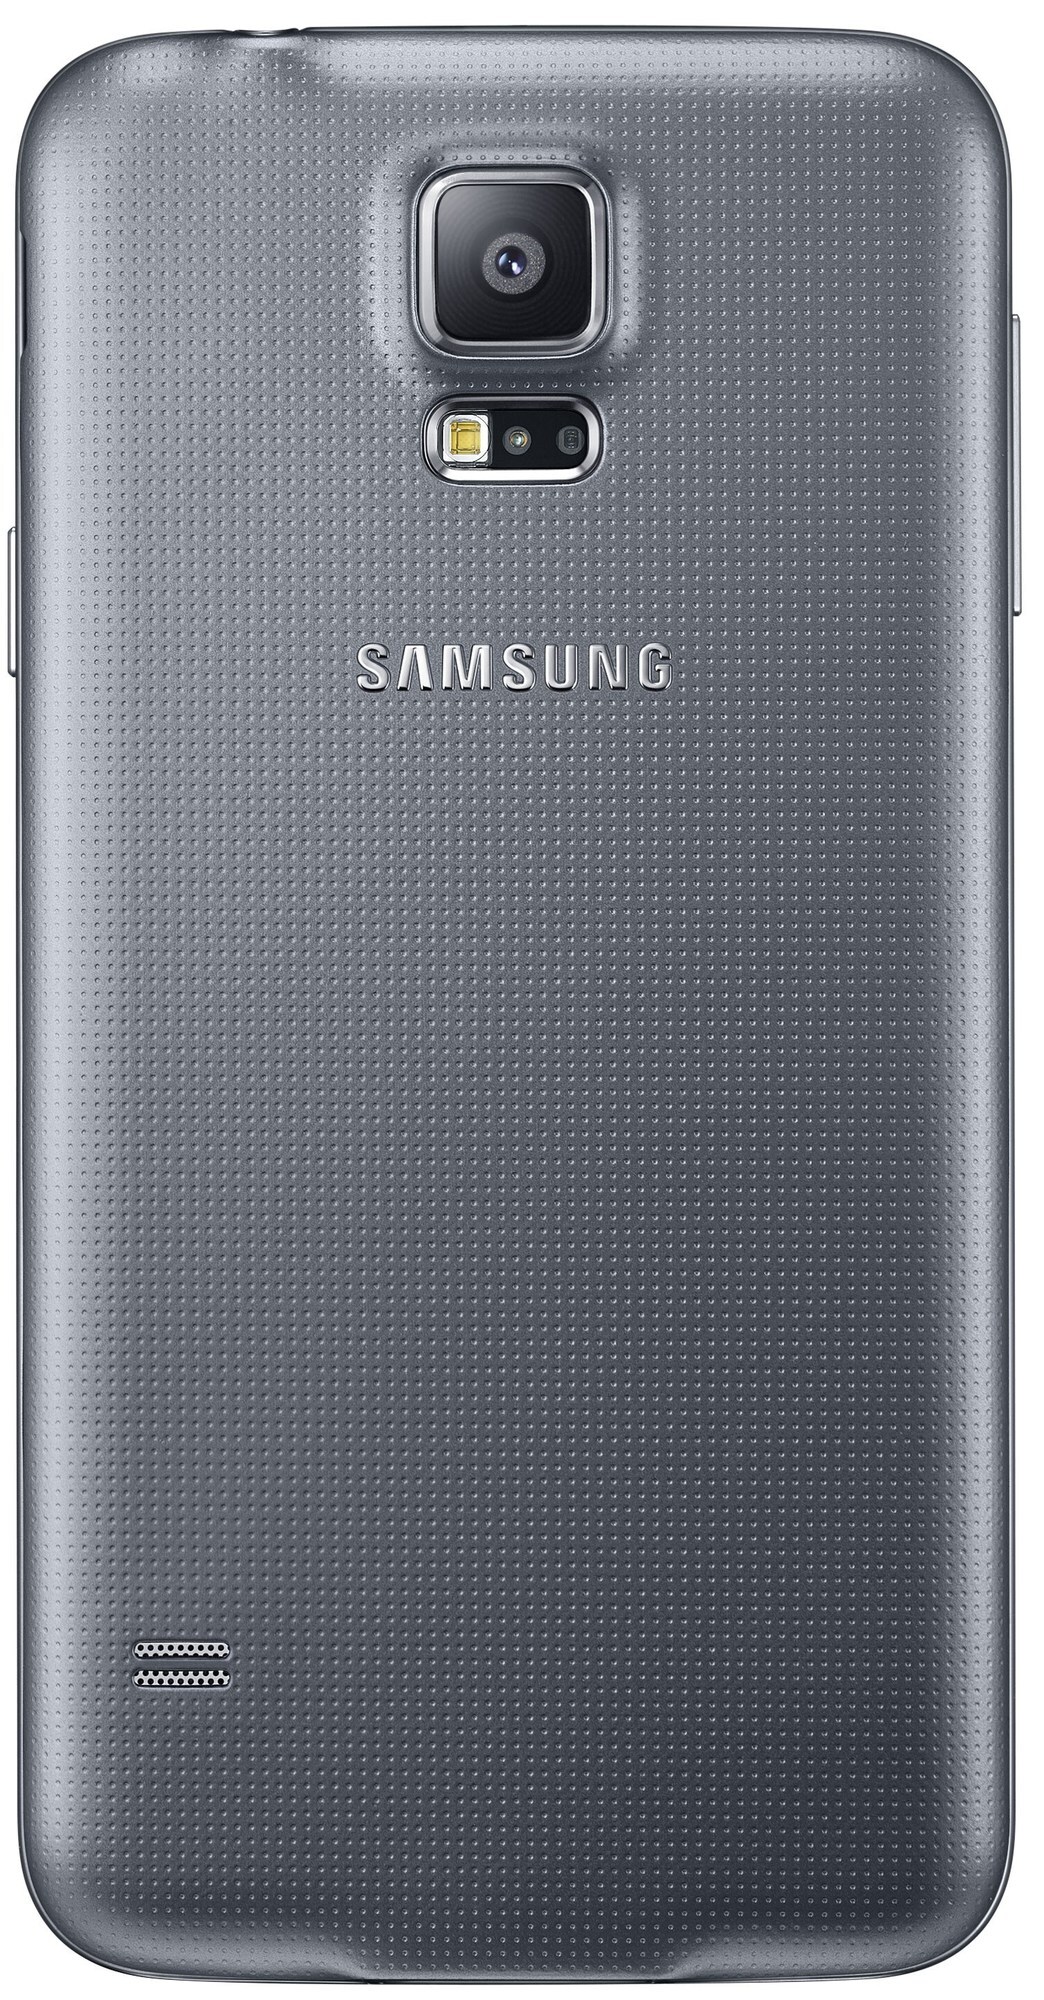 Samsung galaxy s5 neo elkjøp